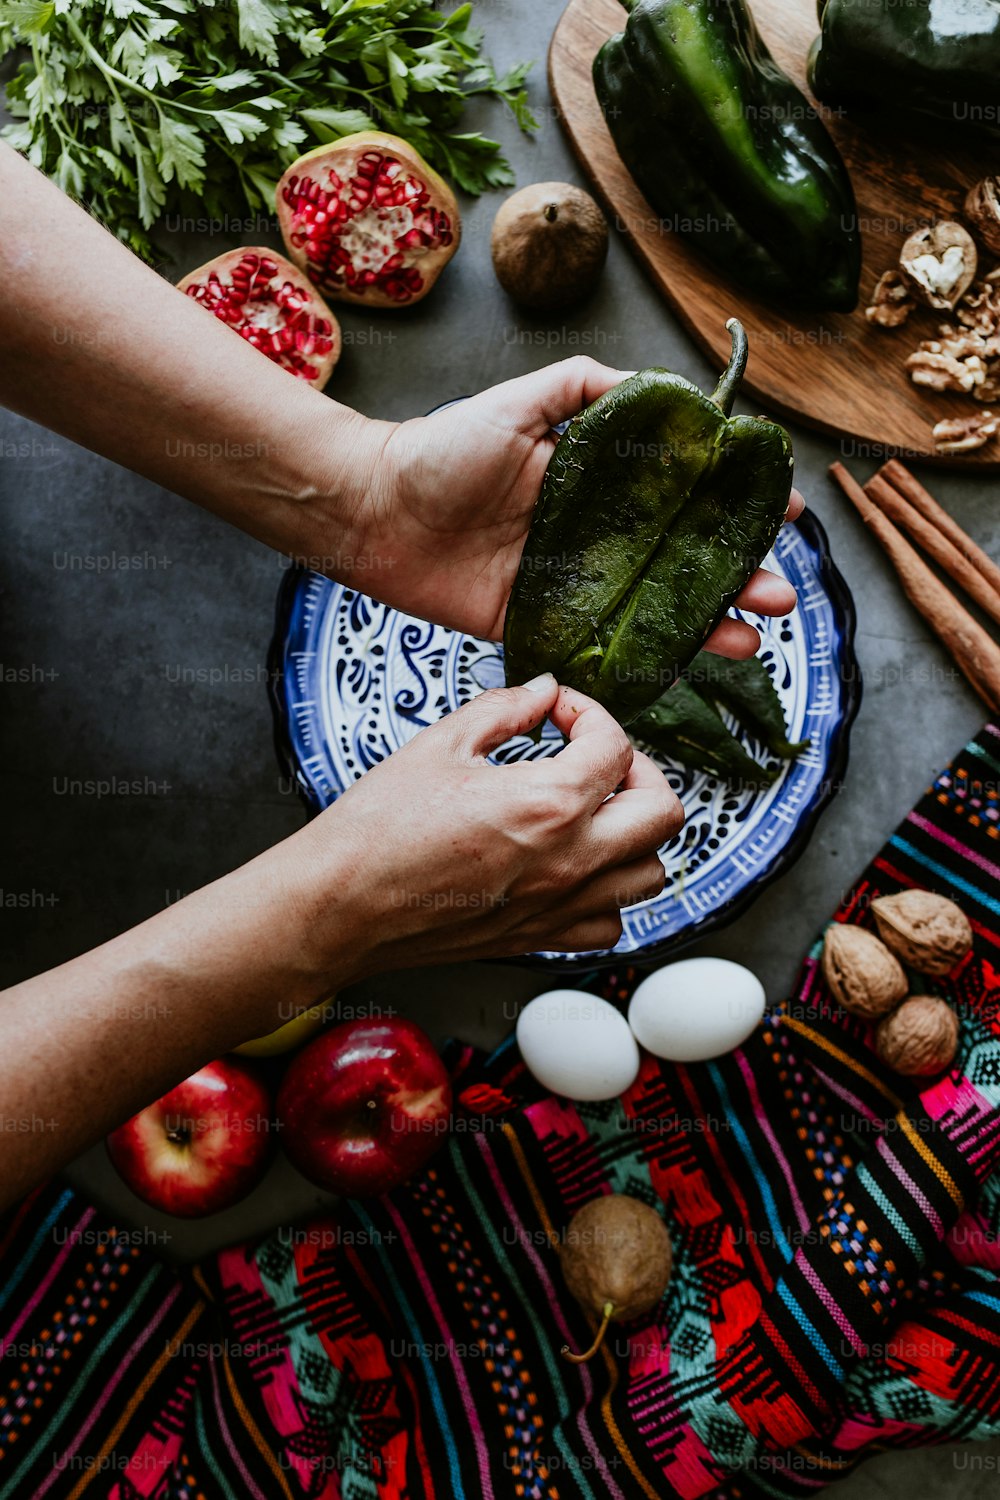 Poblano 칠리와 재료로 칠레 en nogada 레시피를 요리하는 멕시코 여성, 푸에블라 멕시코의 전통 요리